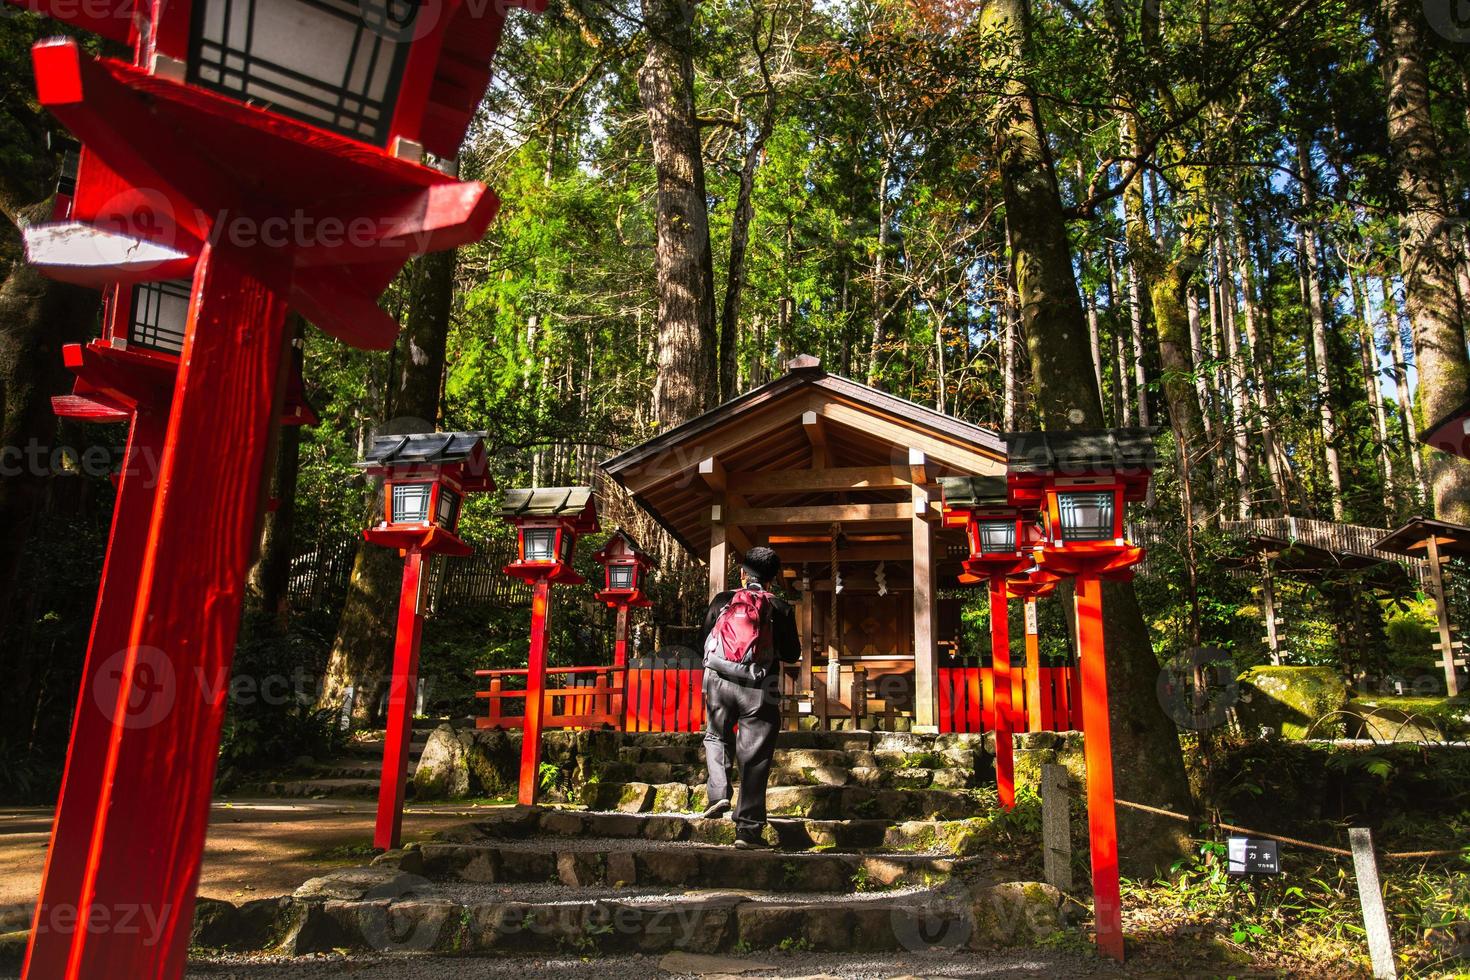 kurama, prefeitura de kyoto, kansai, japão - 21 de novembro de 2019 - turistas visitam o santuário kibune yuinoyashiro no monte kurama foto